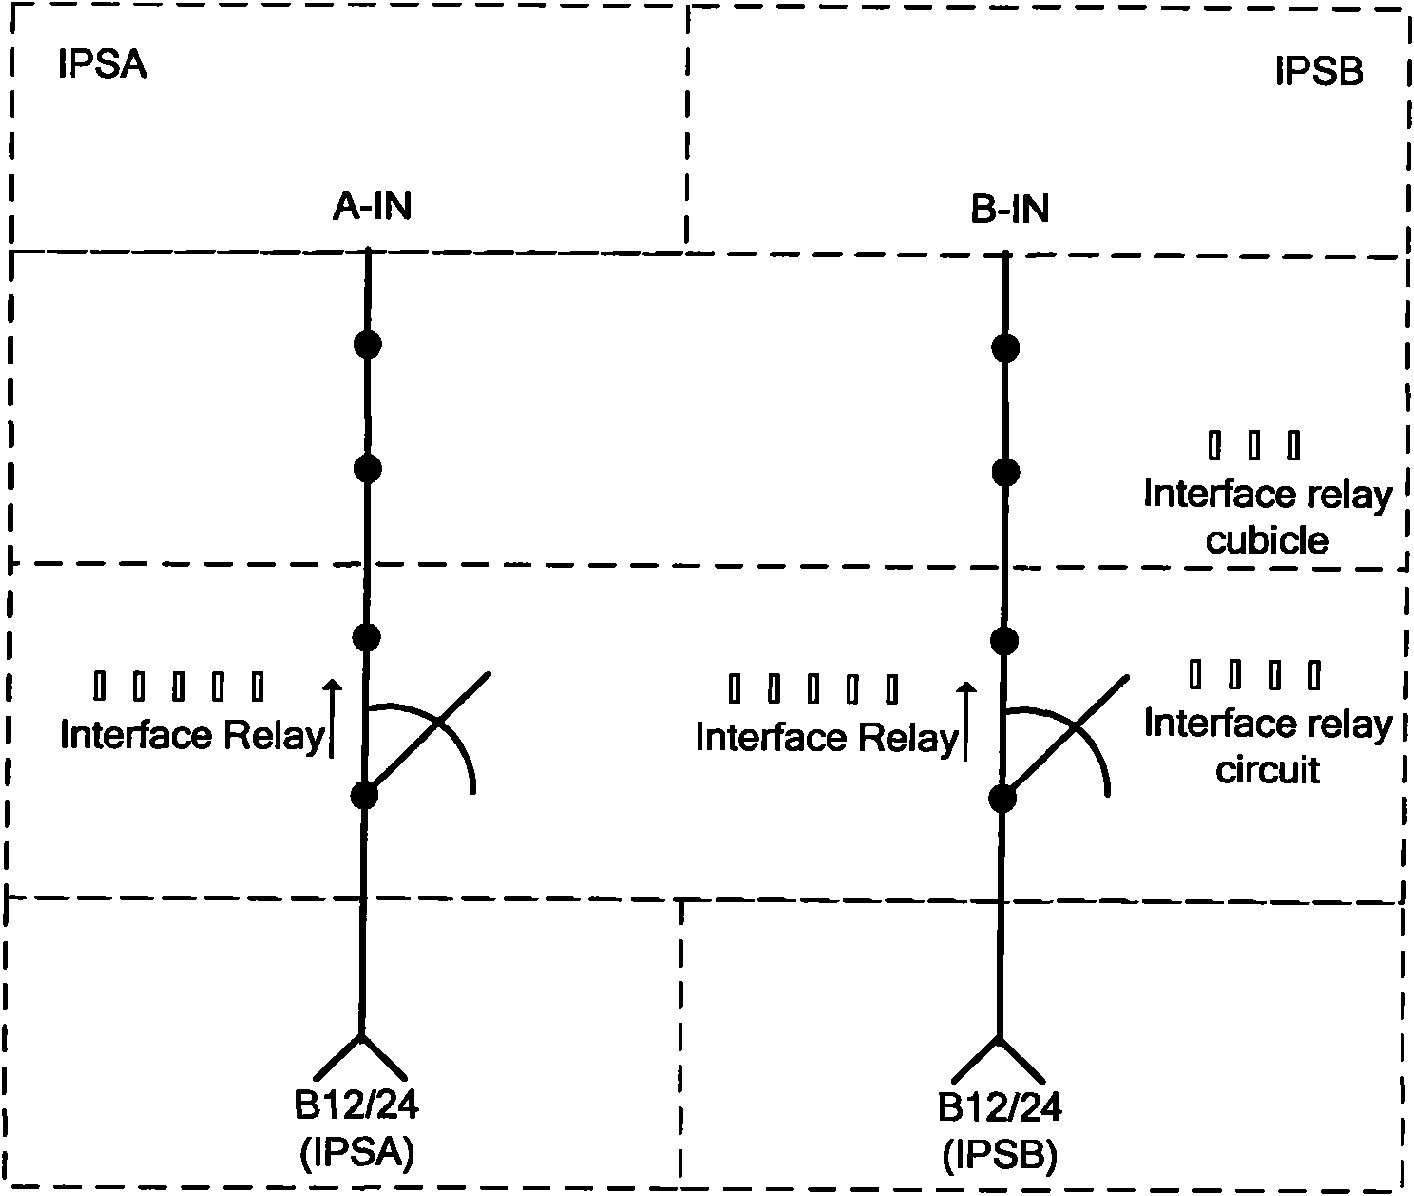 Computer interlocking system code bit-level redundancy method